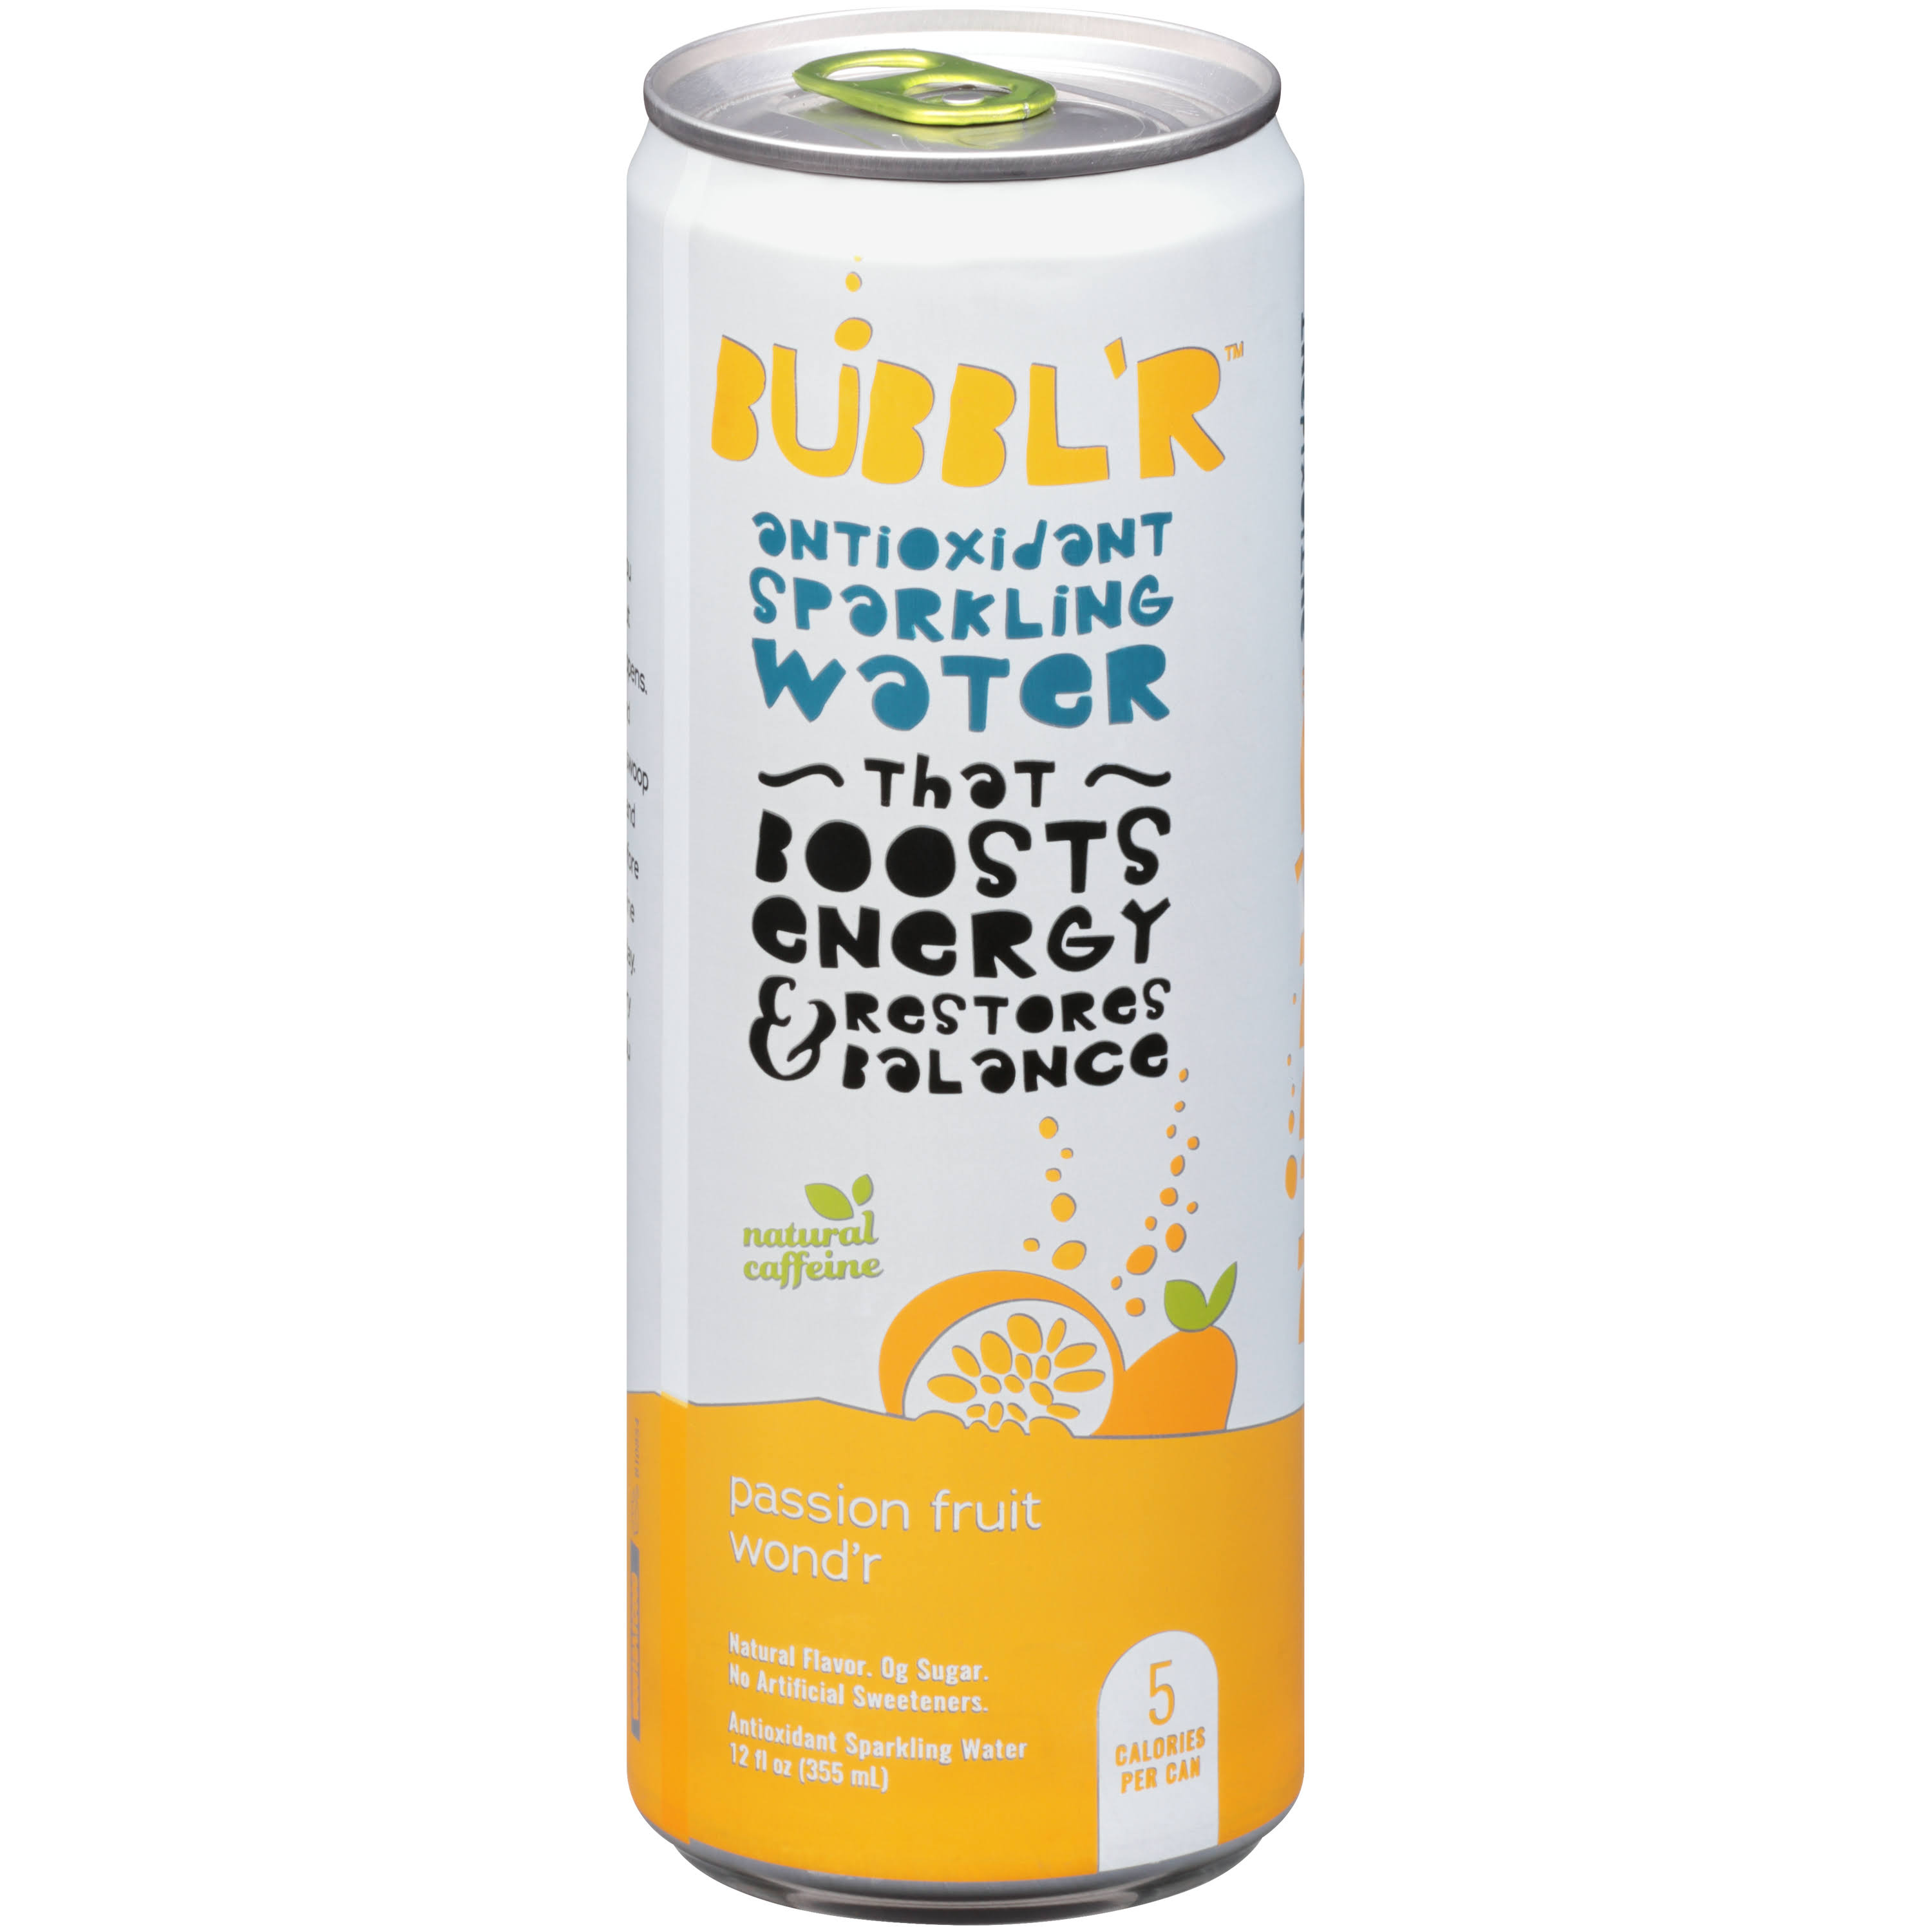 Bubblr Sparkling Water, Antioxidant, Passion Fruit Wond'r - 12 fl oz